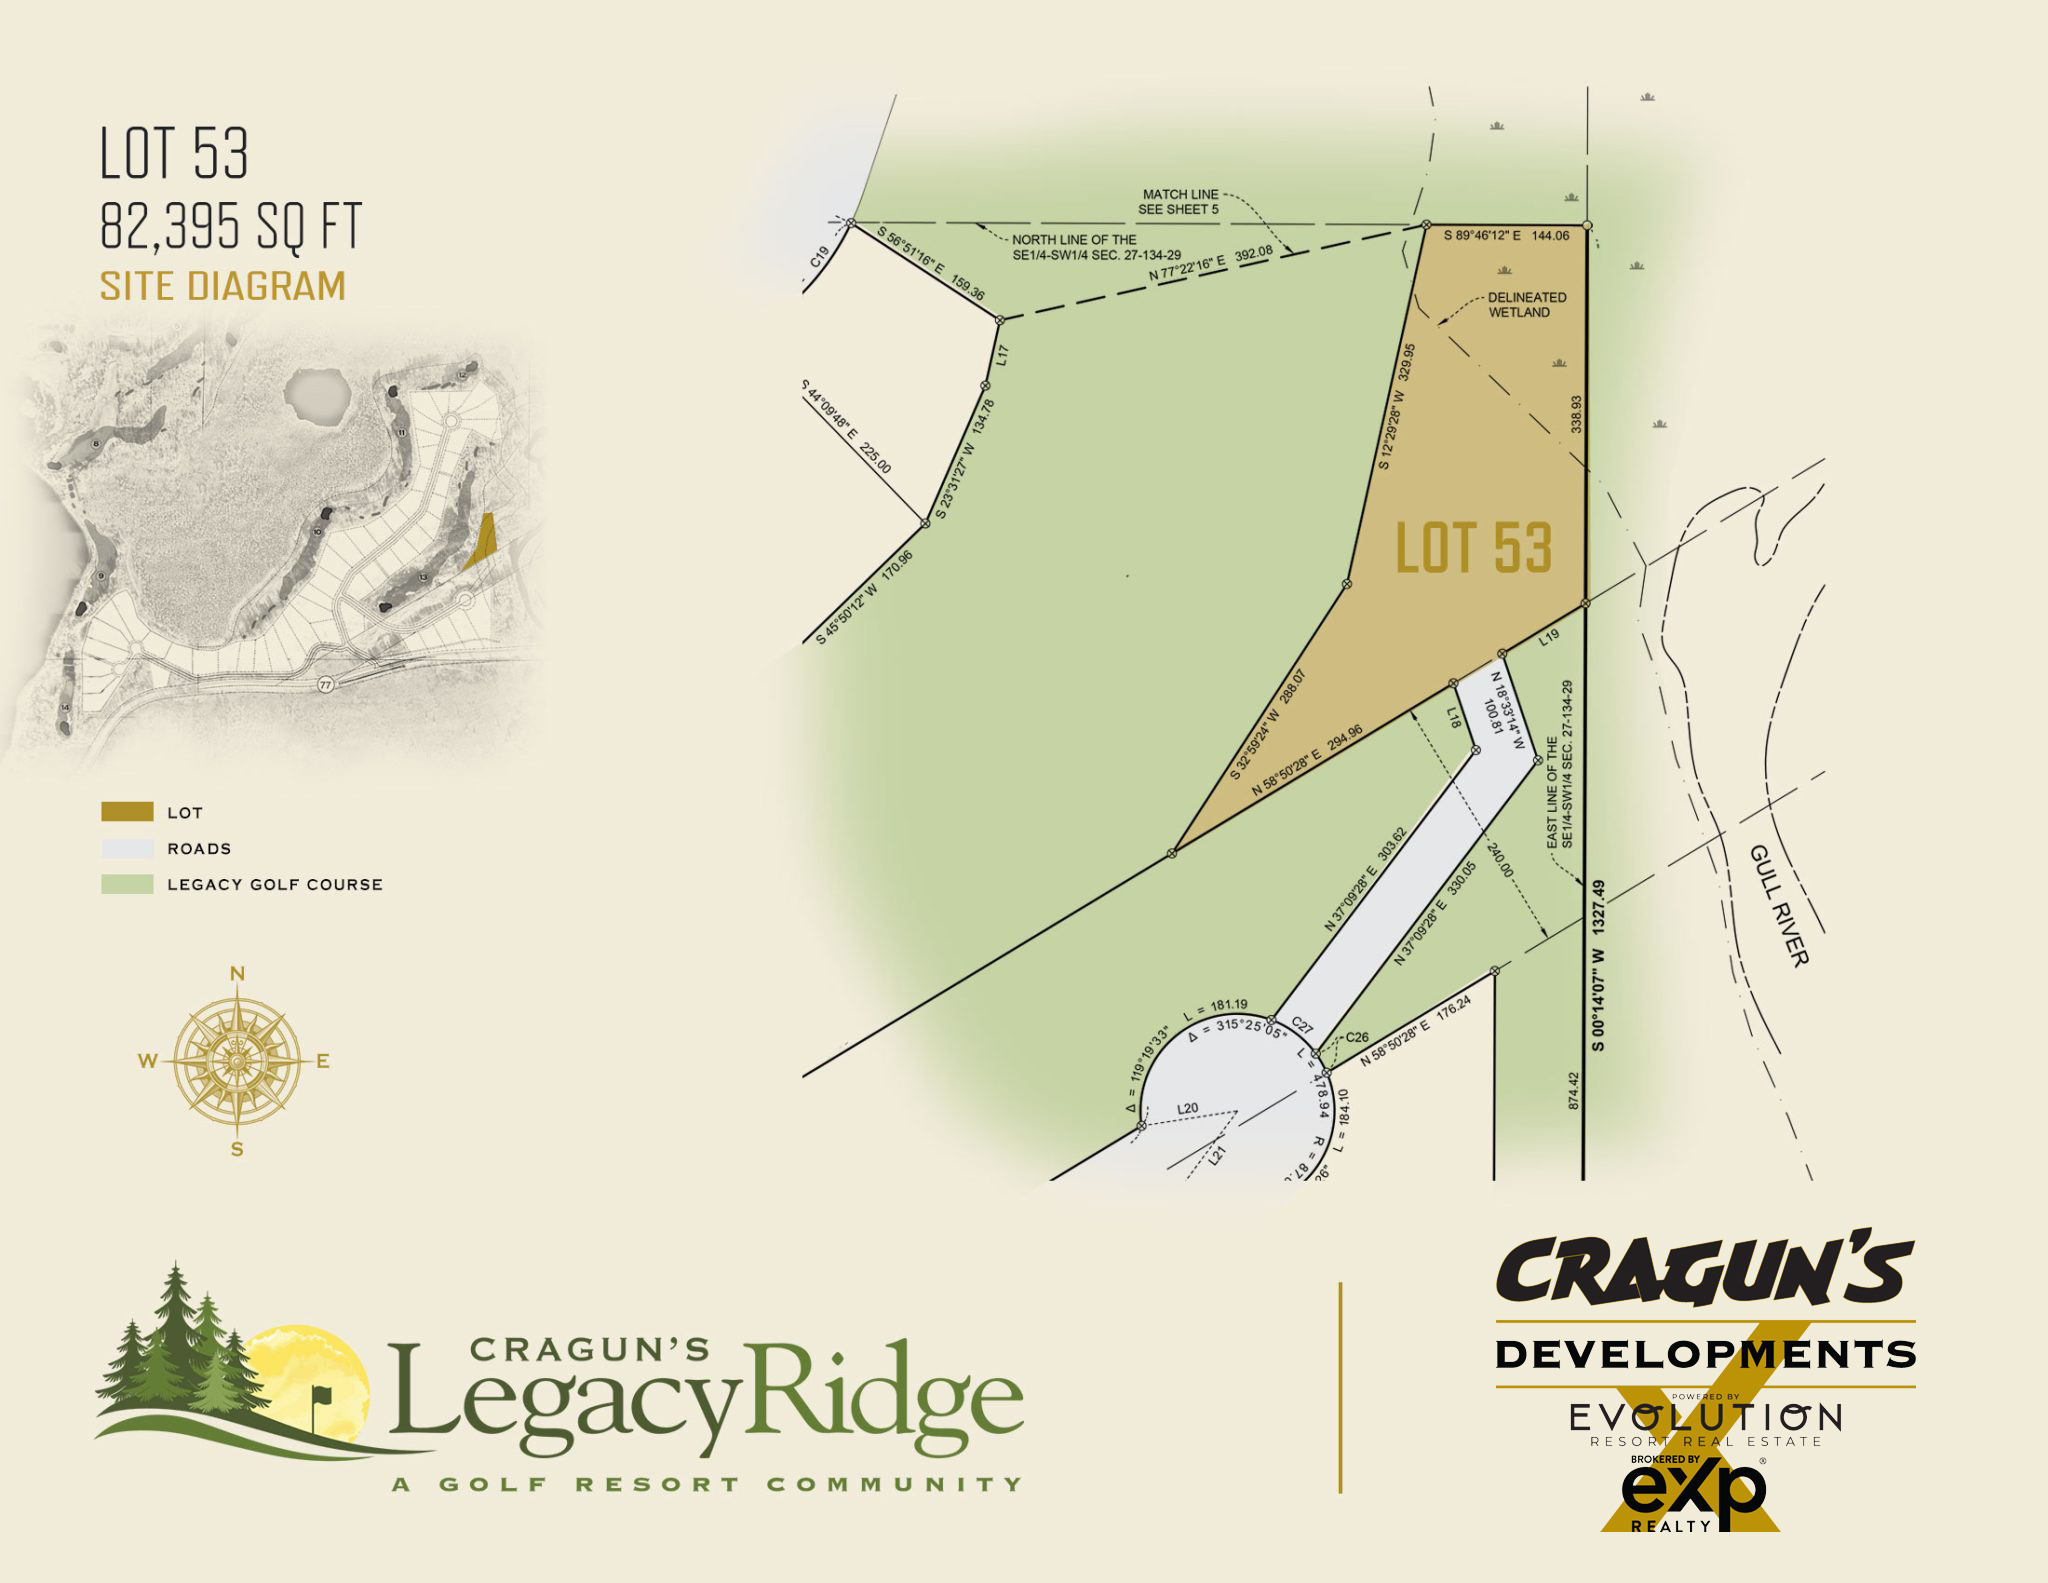 Legacy Ridge Lot 53 at Cragun's Developments in Brainerd, MN